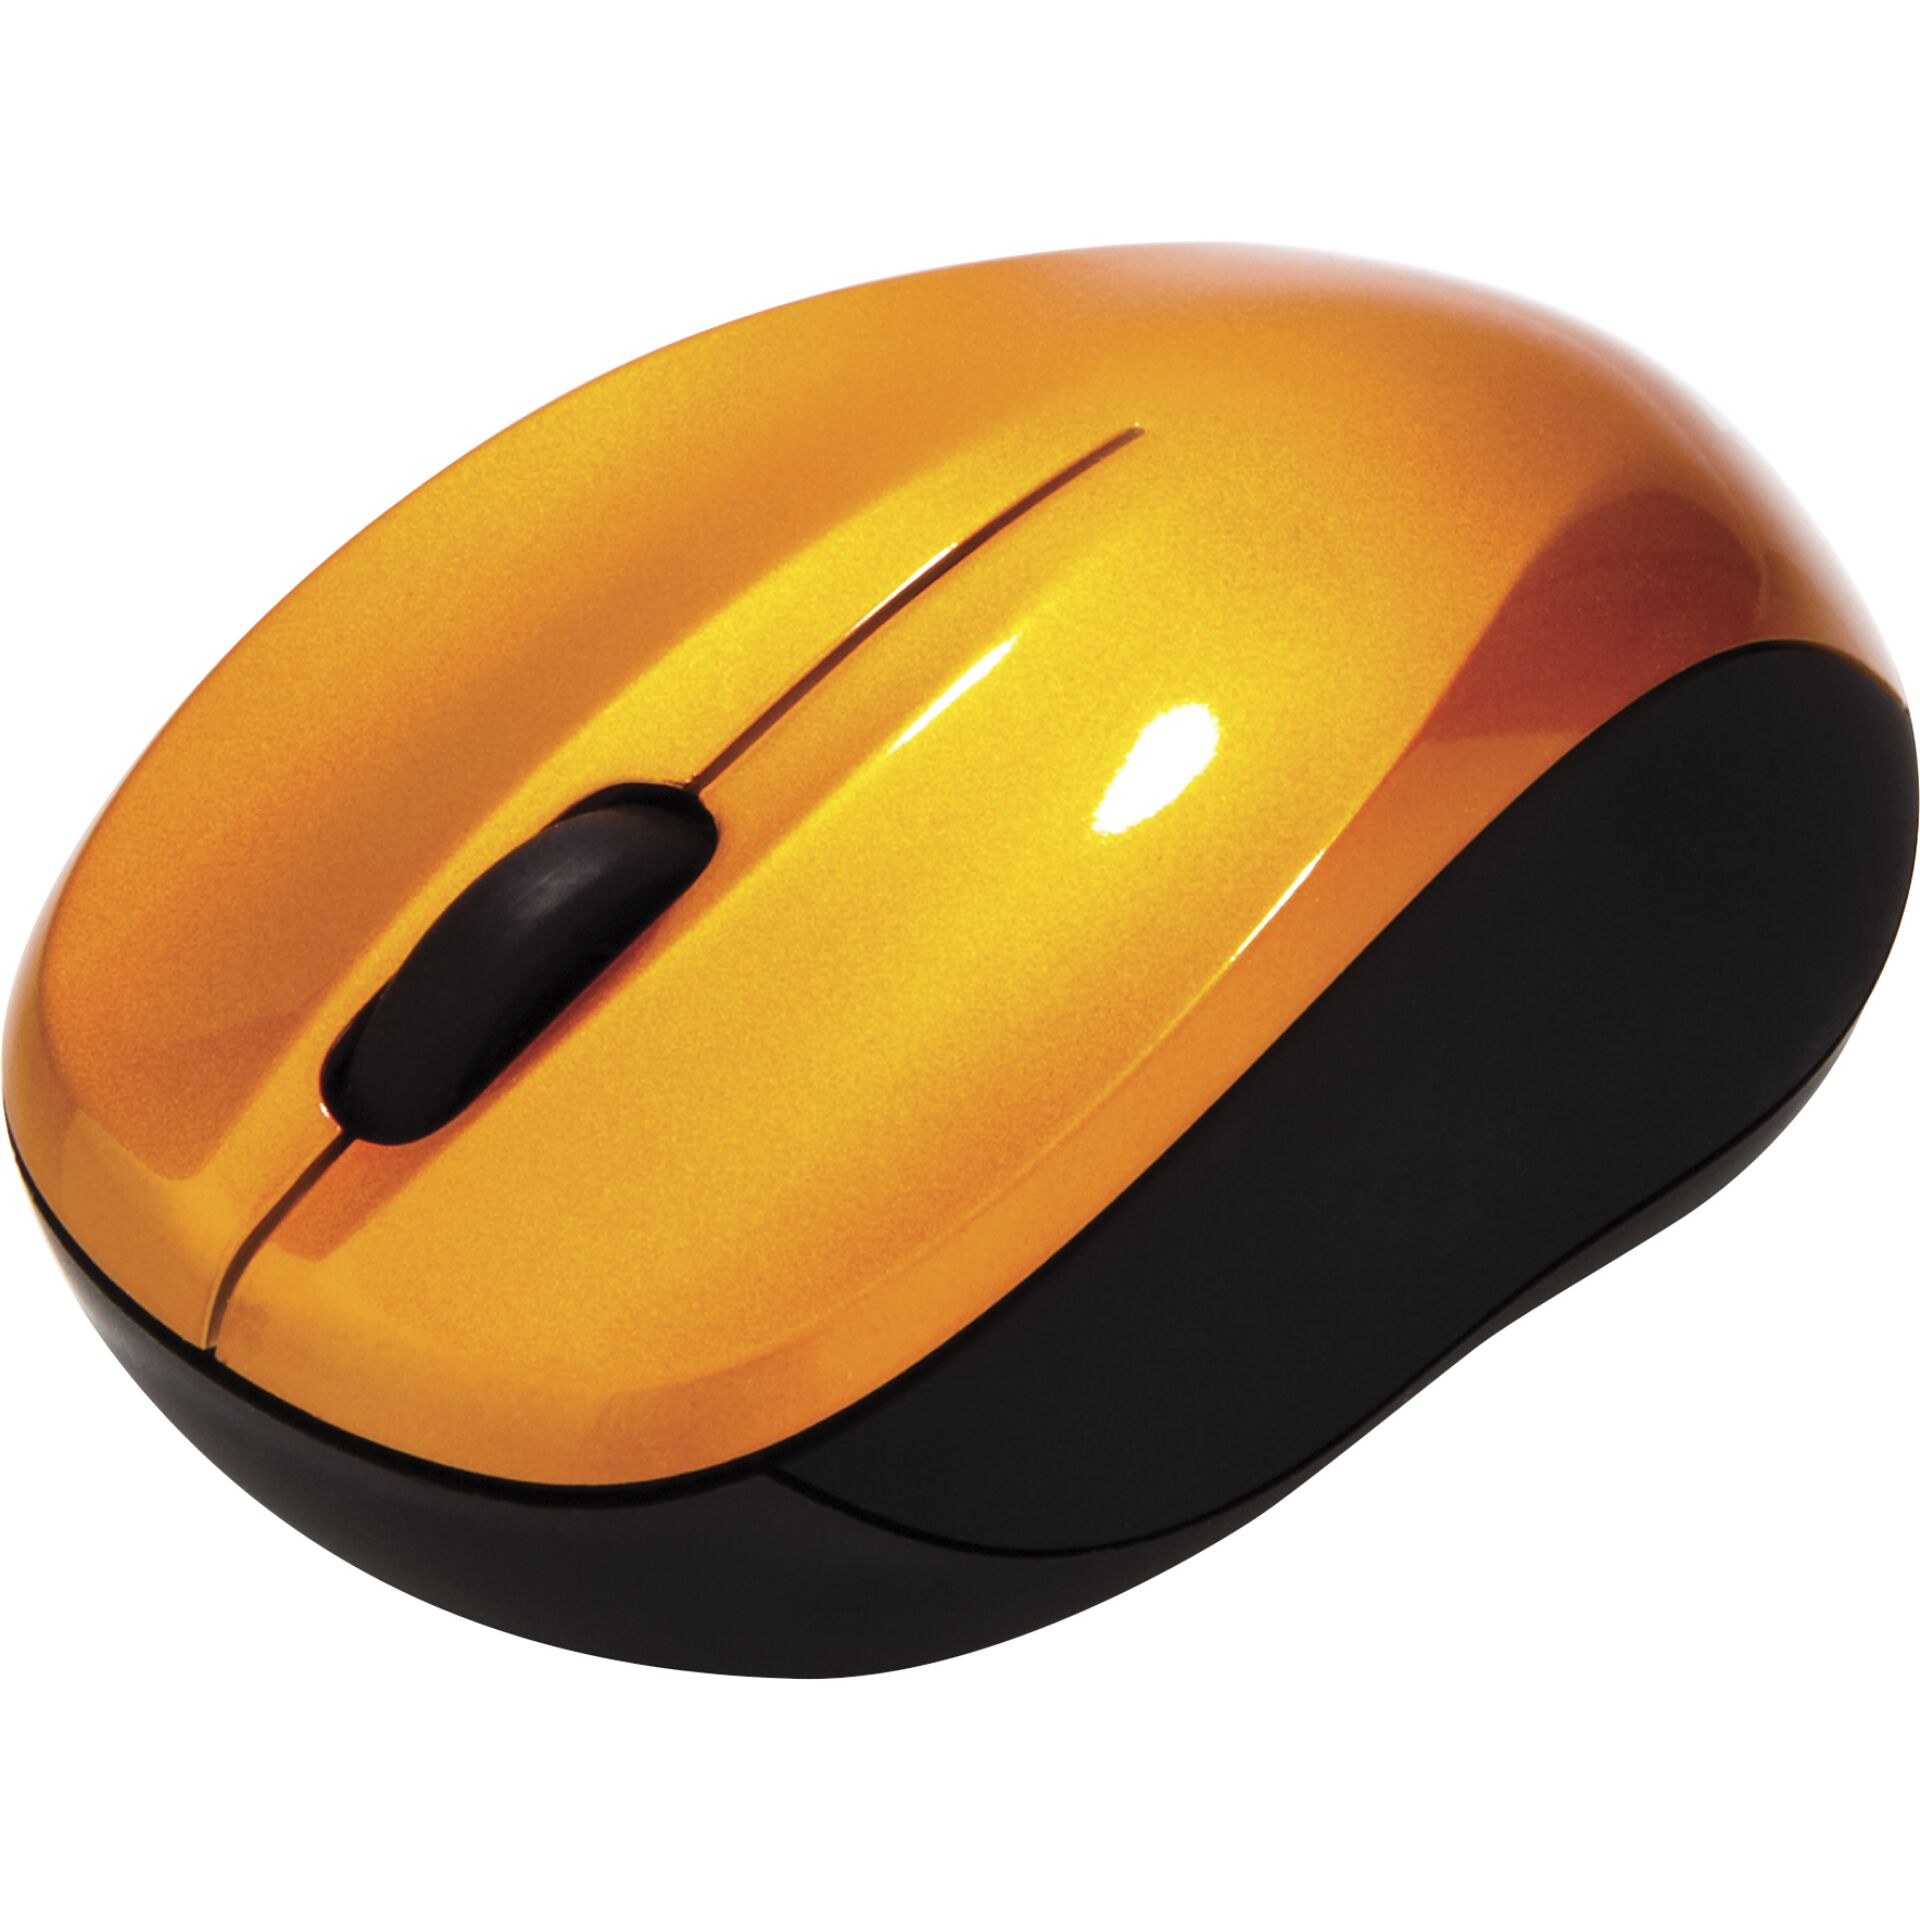 Verbatim Go Nano Wireless Mouse Volcanic Orange